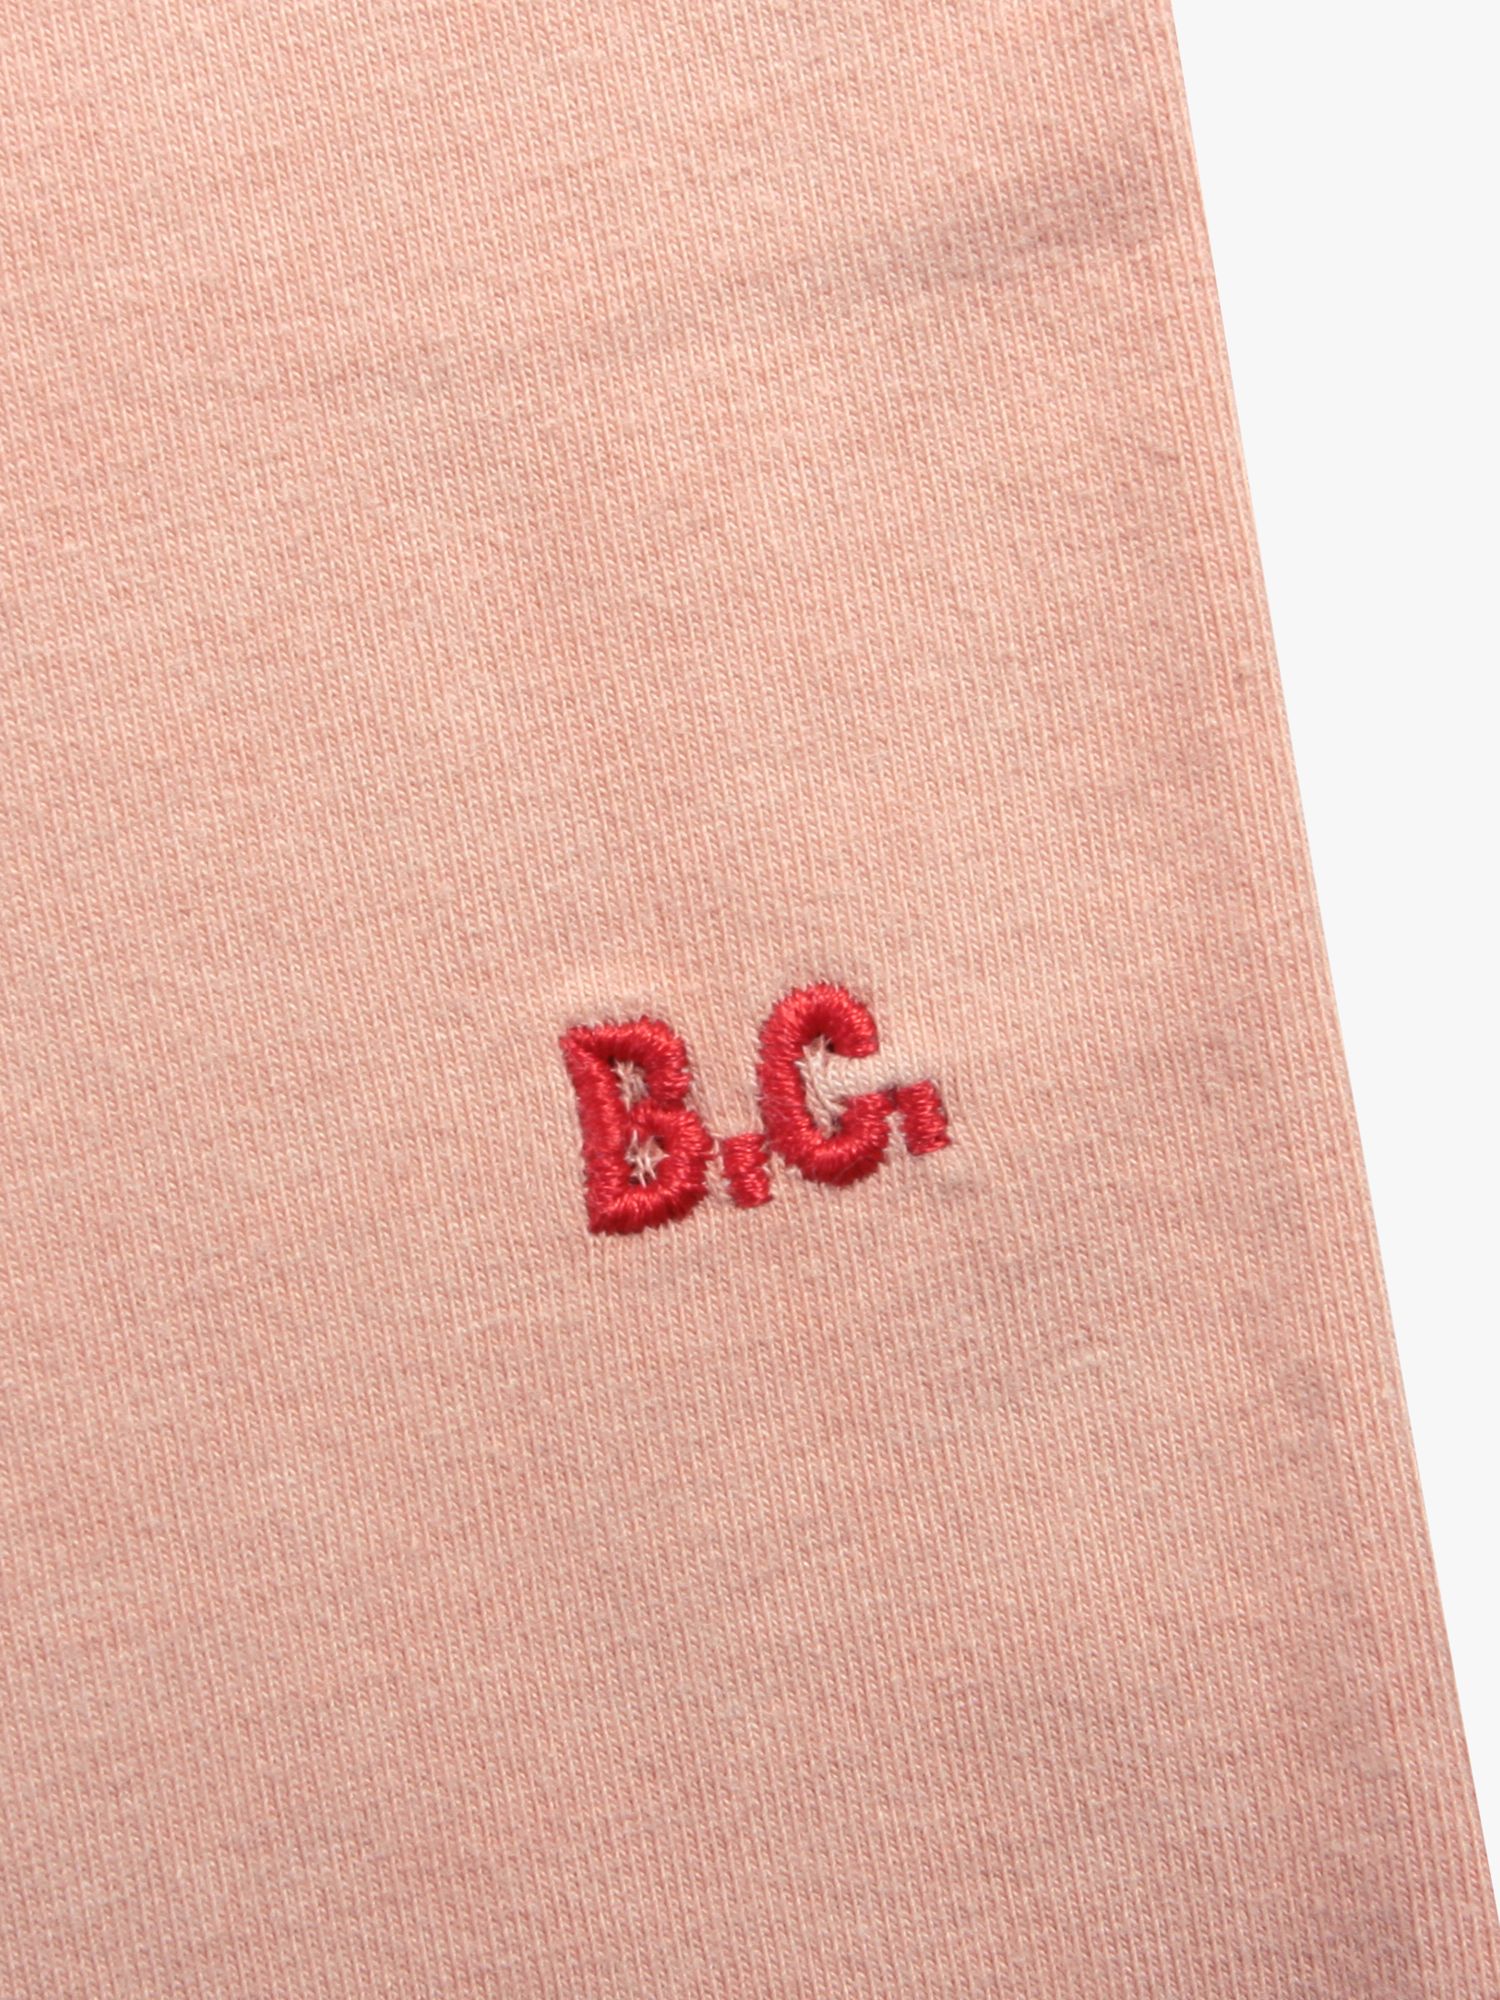 Bobo Choses Kids' Organic Cotton Blend Poma Apple Print Leggings, Pink, 2-3 years